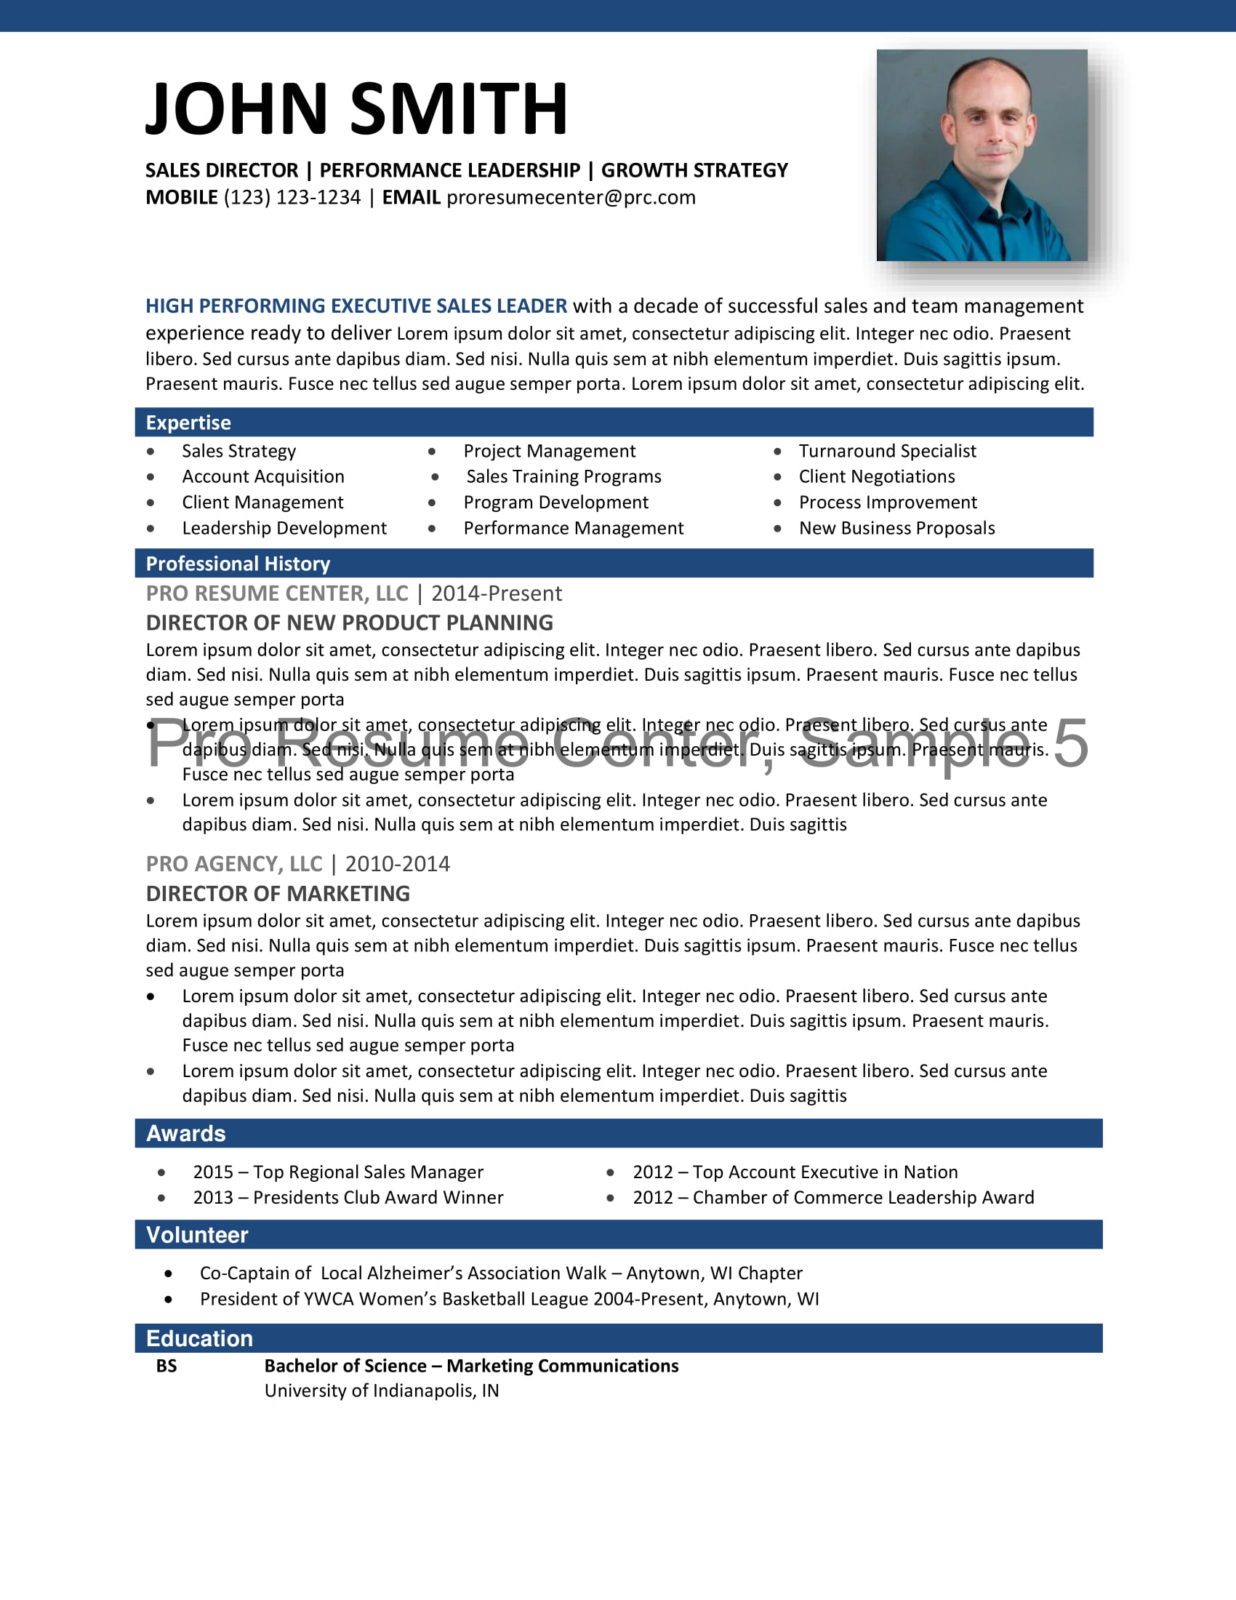 Resume Format Sample 5